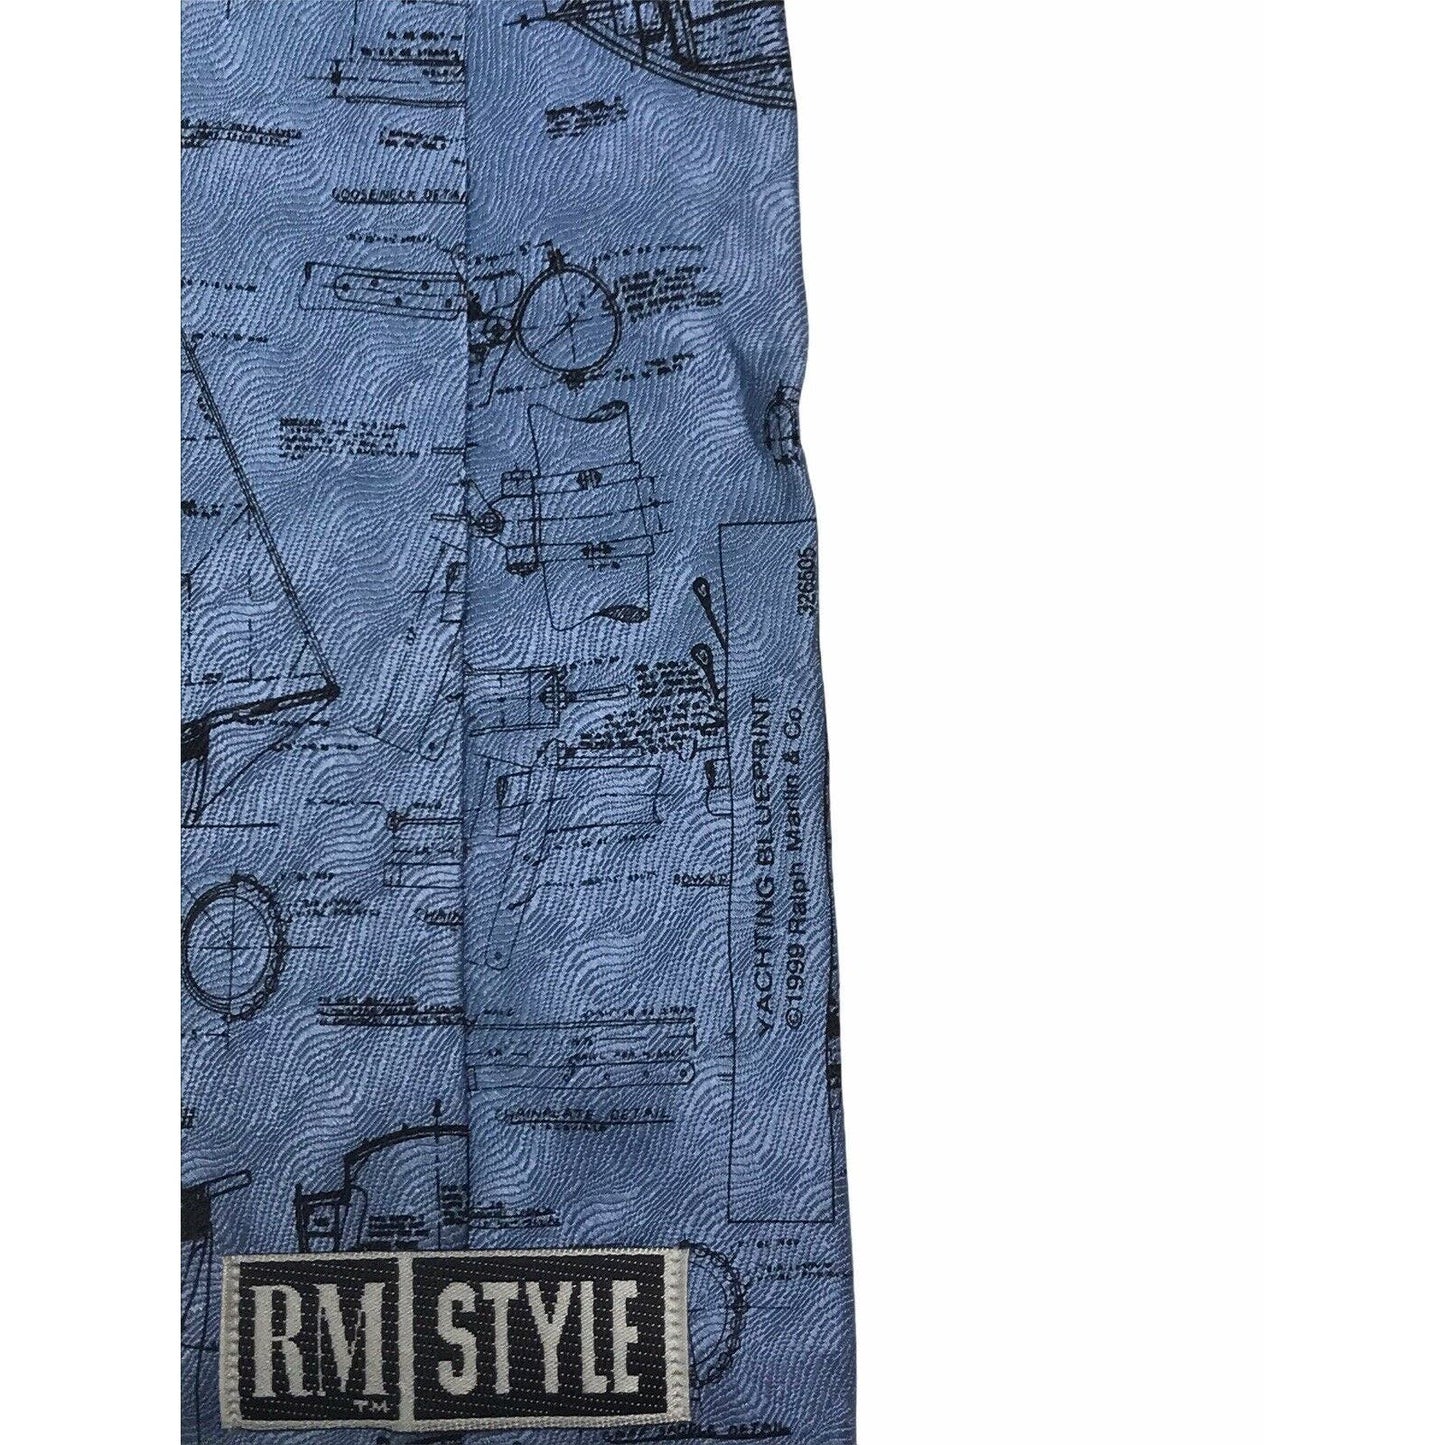 Ralph Marlin RM Style Yachting Blueprints Vintage Novelty 100% Silk Necktie